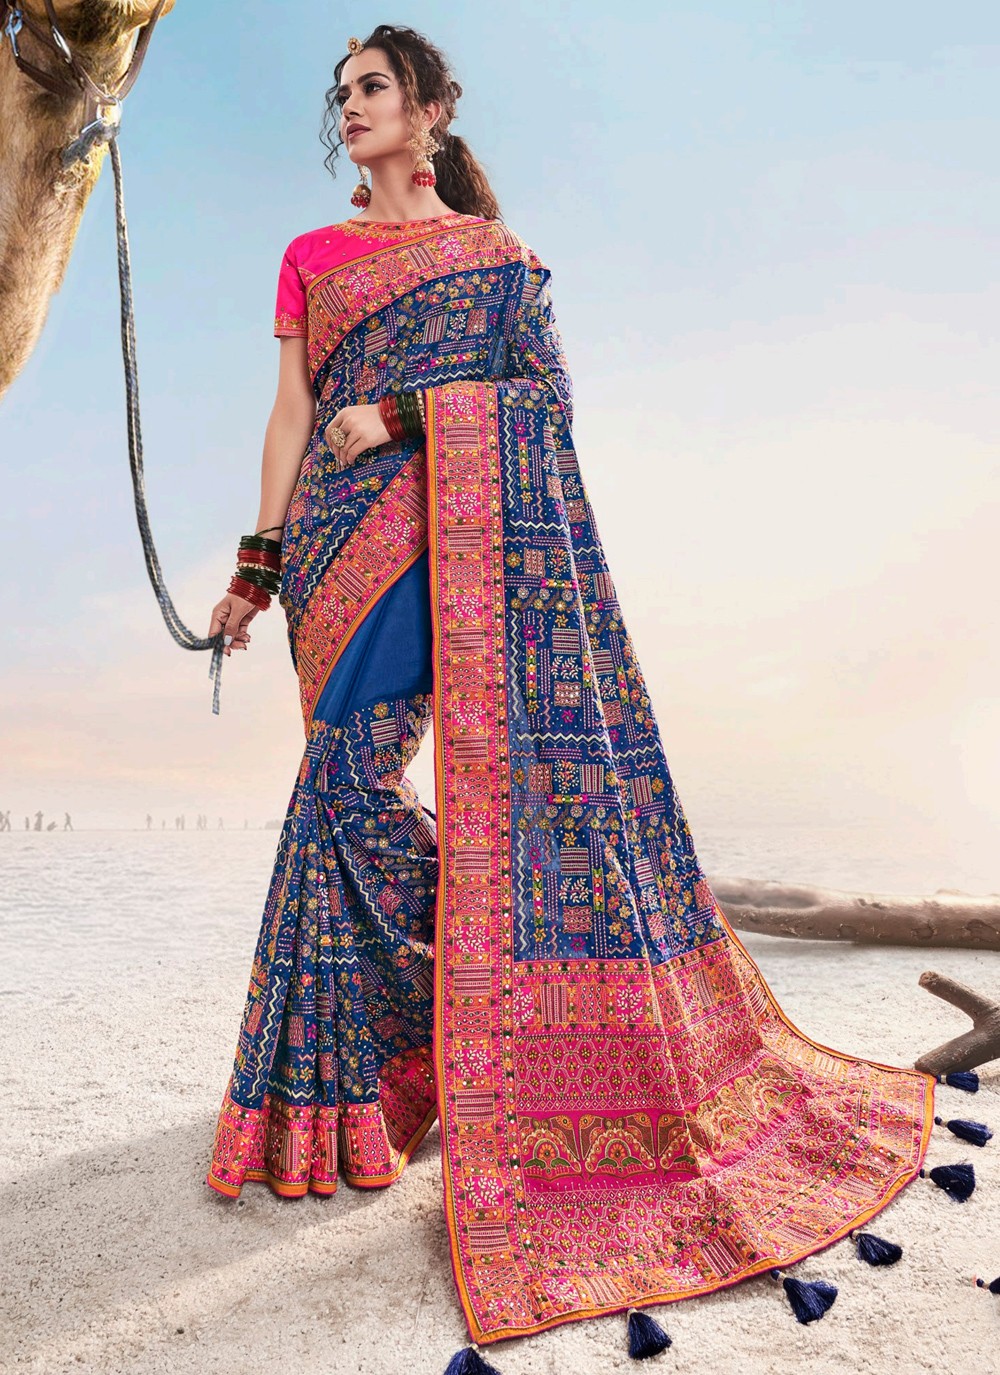 Blue and Red Embroidered Saree Indian Pakistani Ethnic Wedding Designer Sari